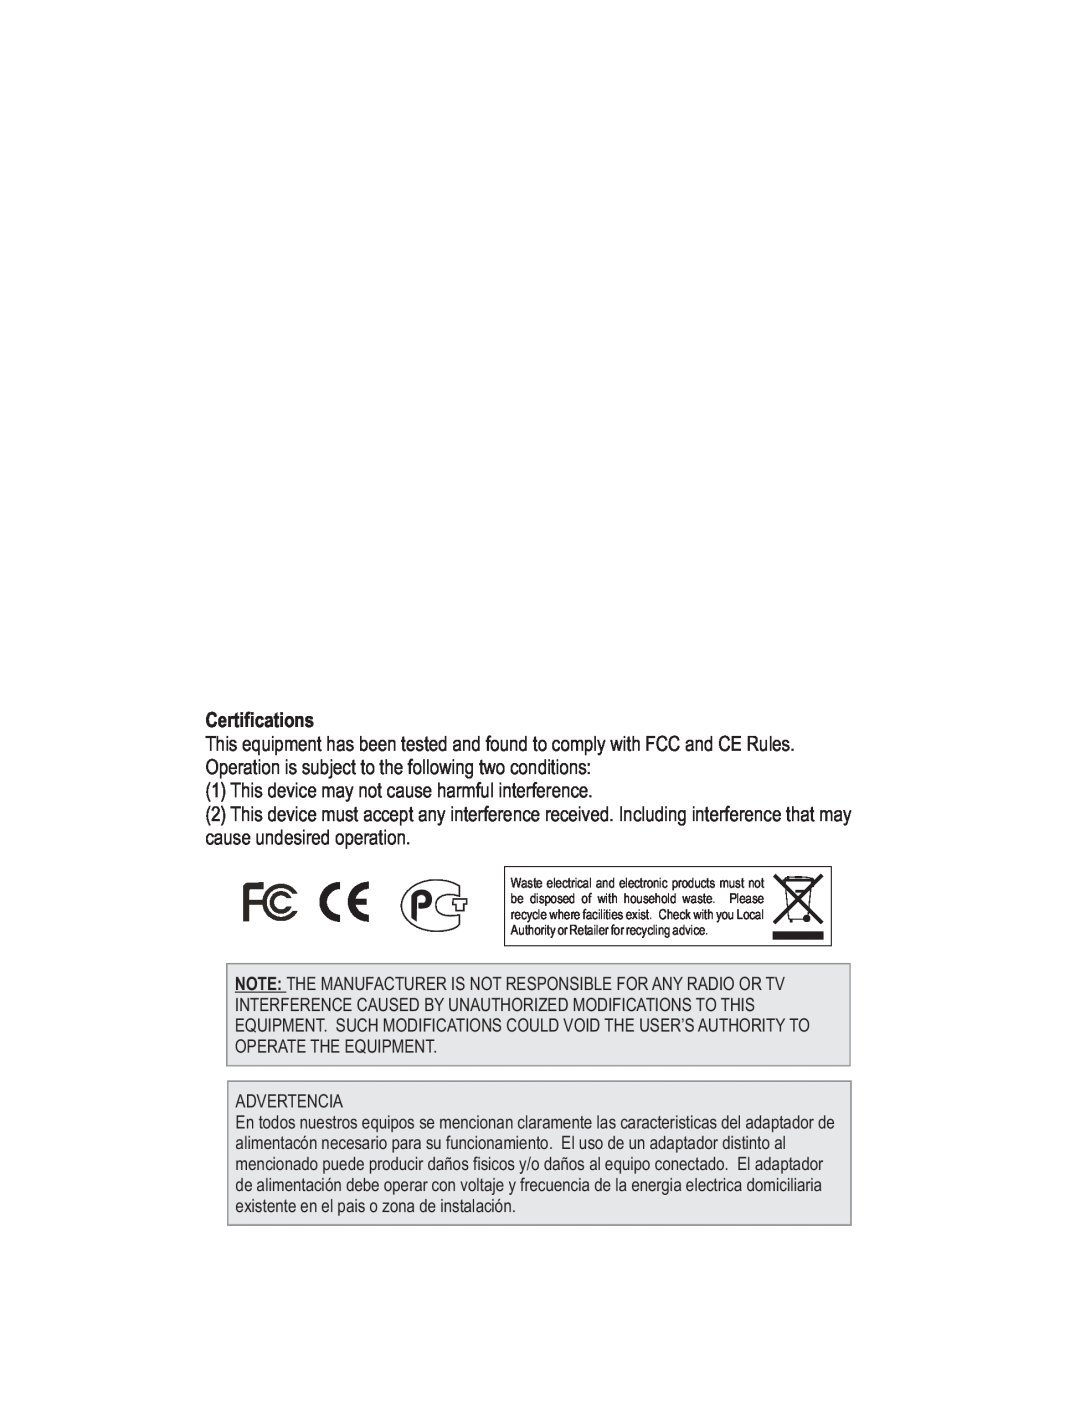 TRENDnet Wireless N Router Internet manual Certifications 